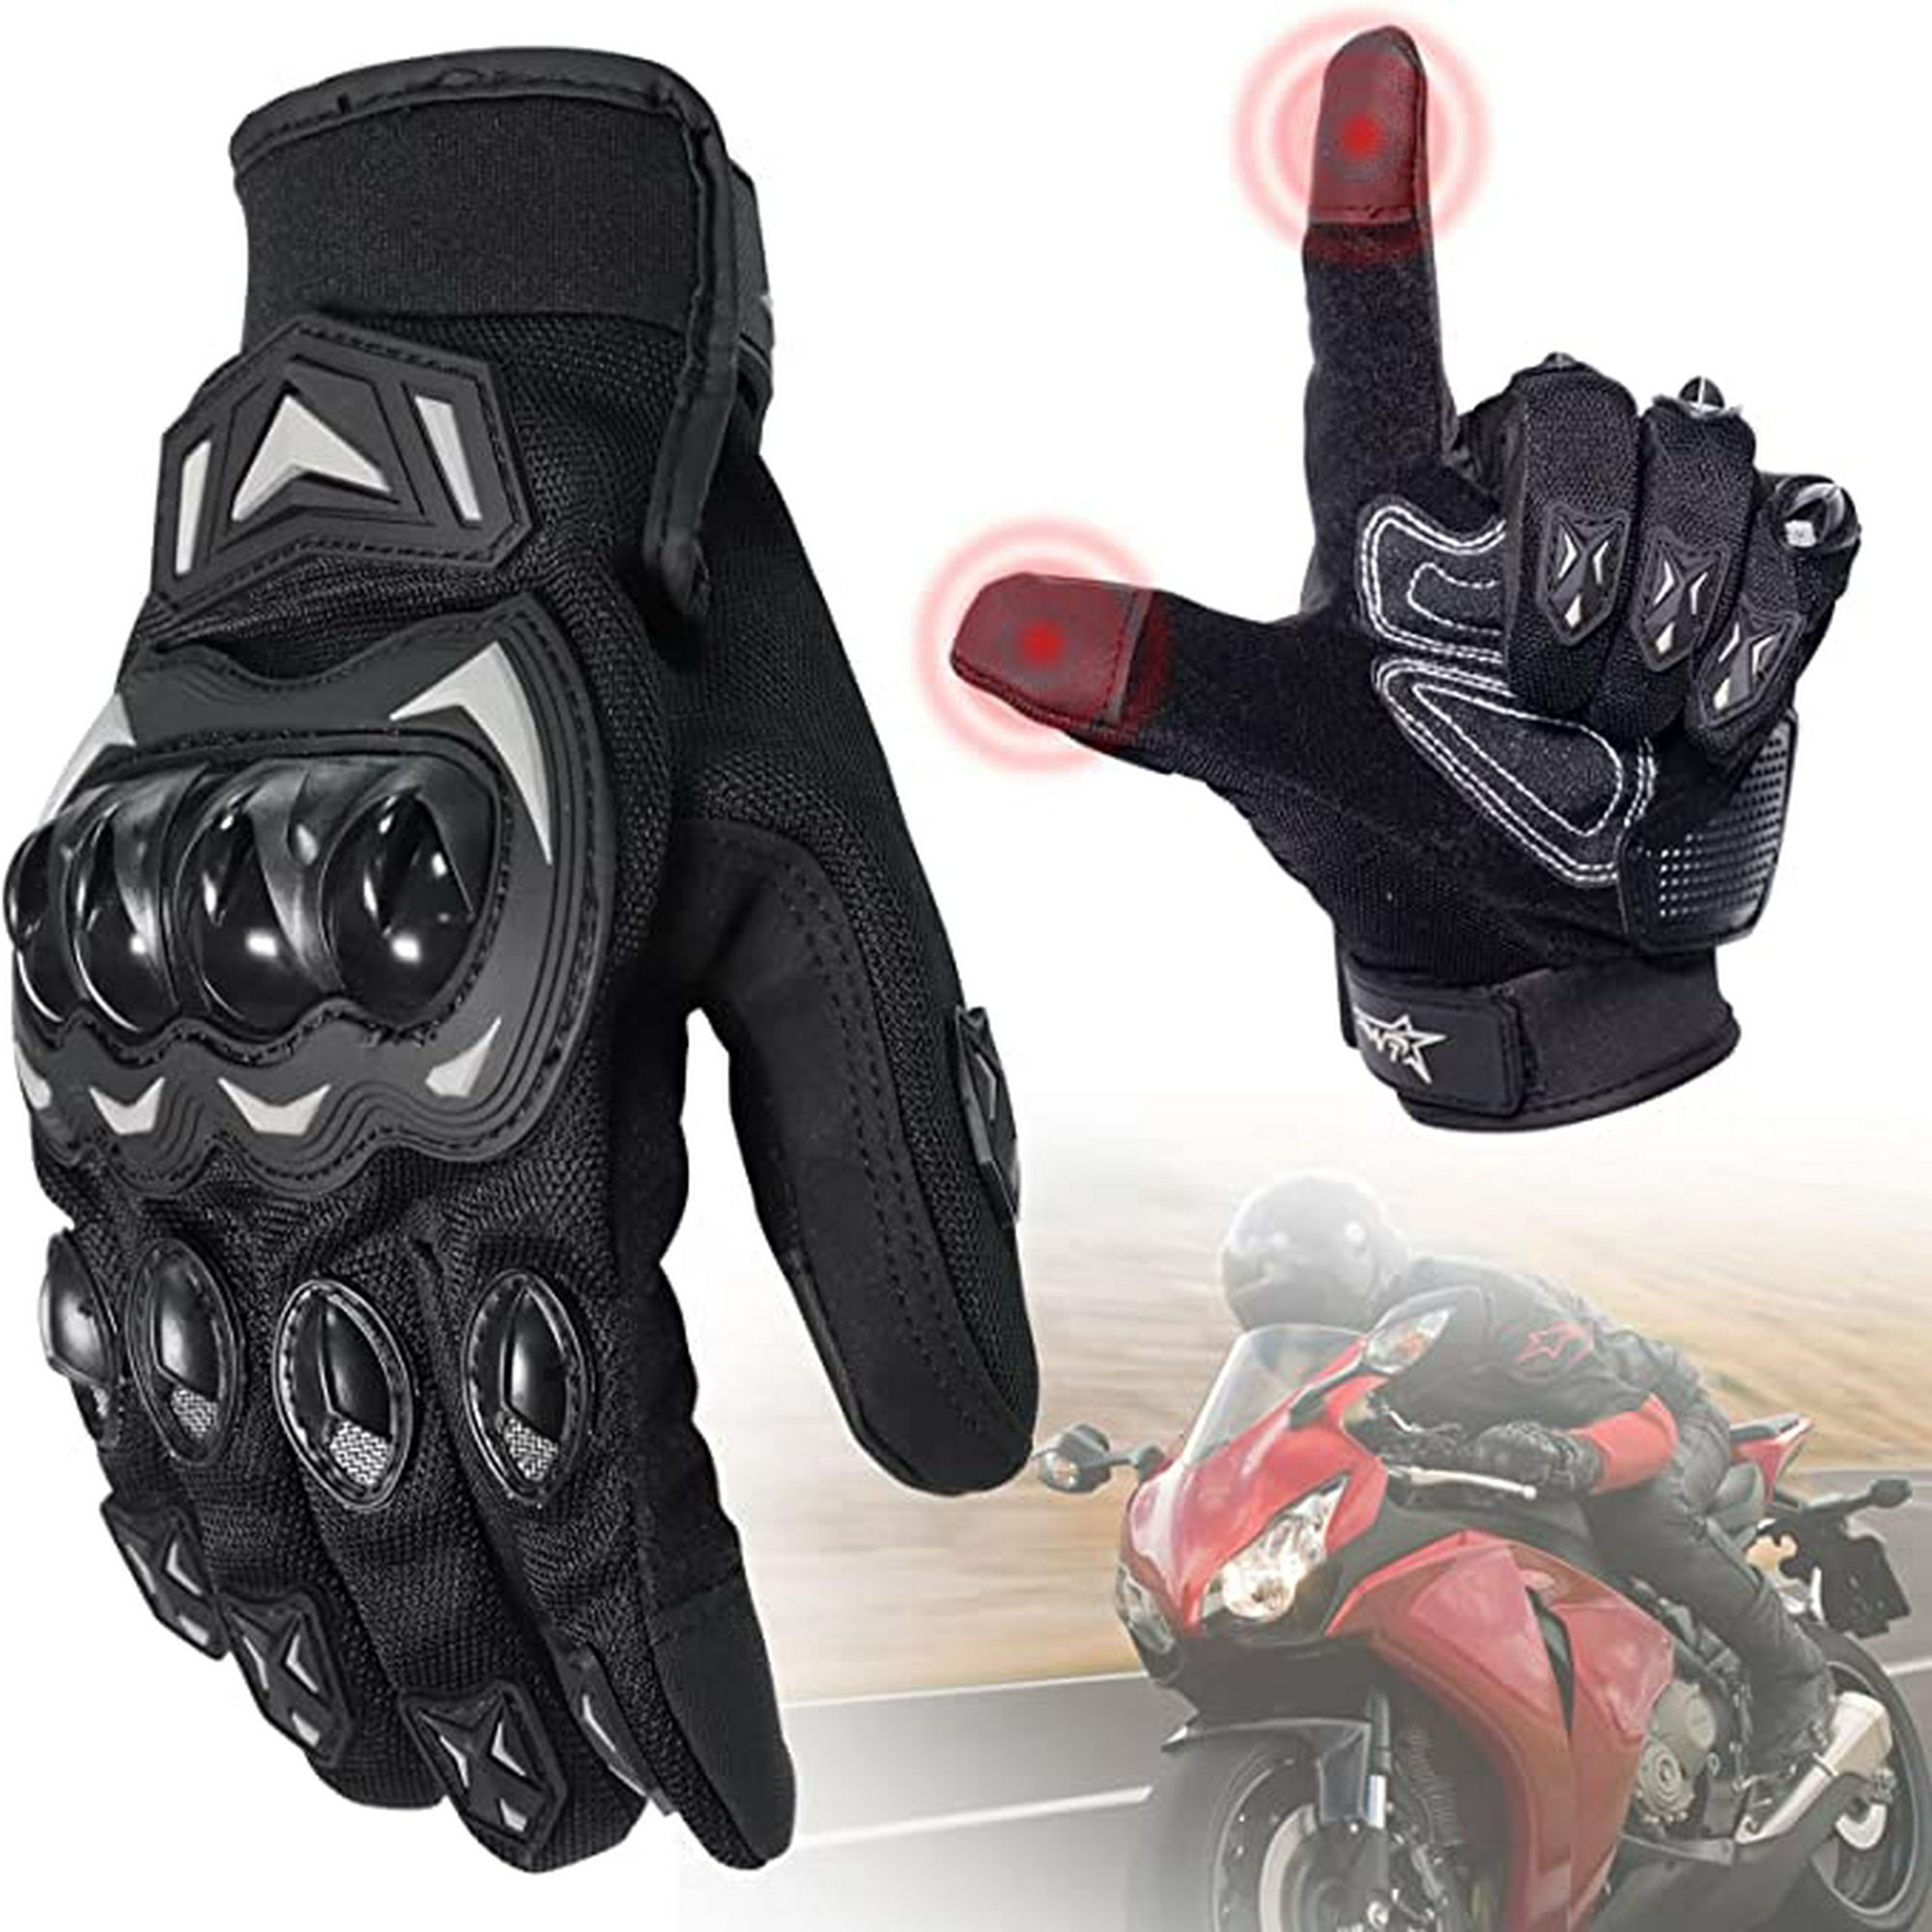 Guantes Moto Cuero Tactil Proteccion Motociclista Black - Negro